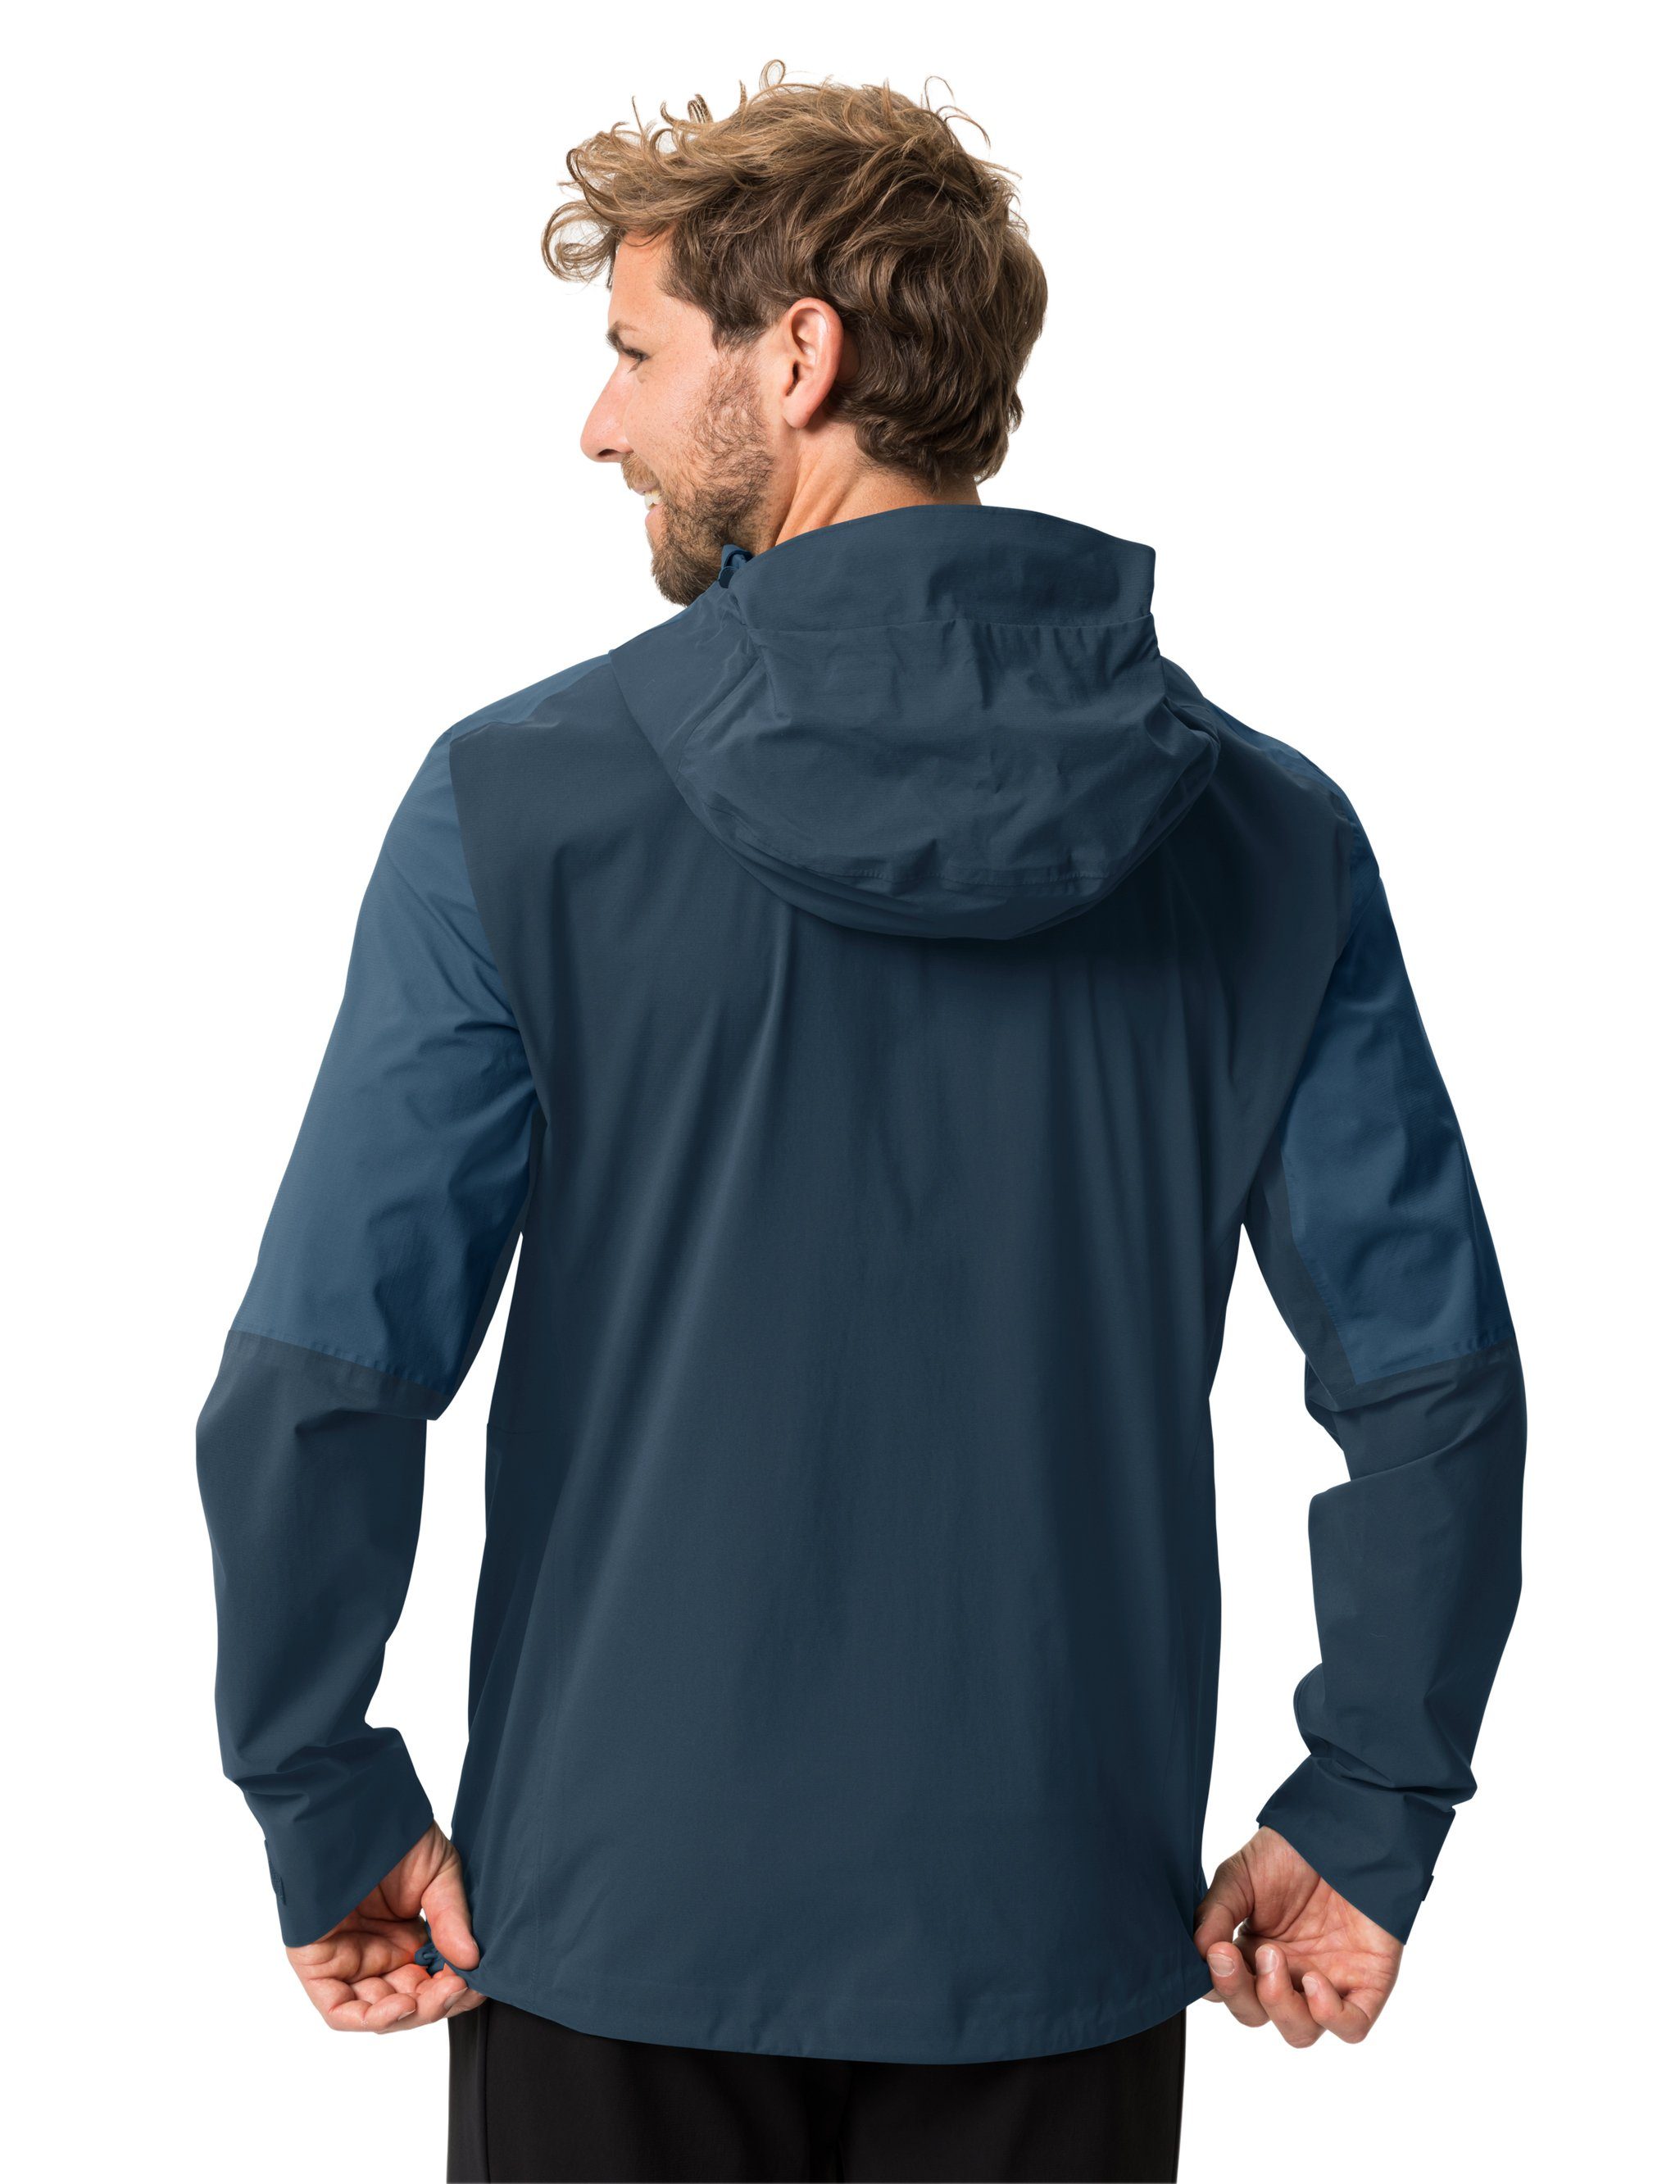 sea/blue dark Jacket (1-St) kompensiert Outdoorjacke Simony Men's VAUDE 2,5L Klimaneutral IV